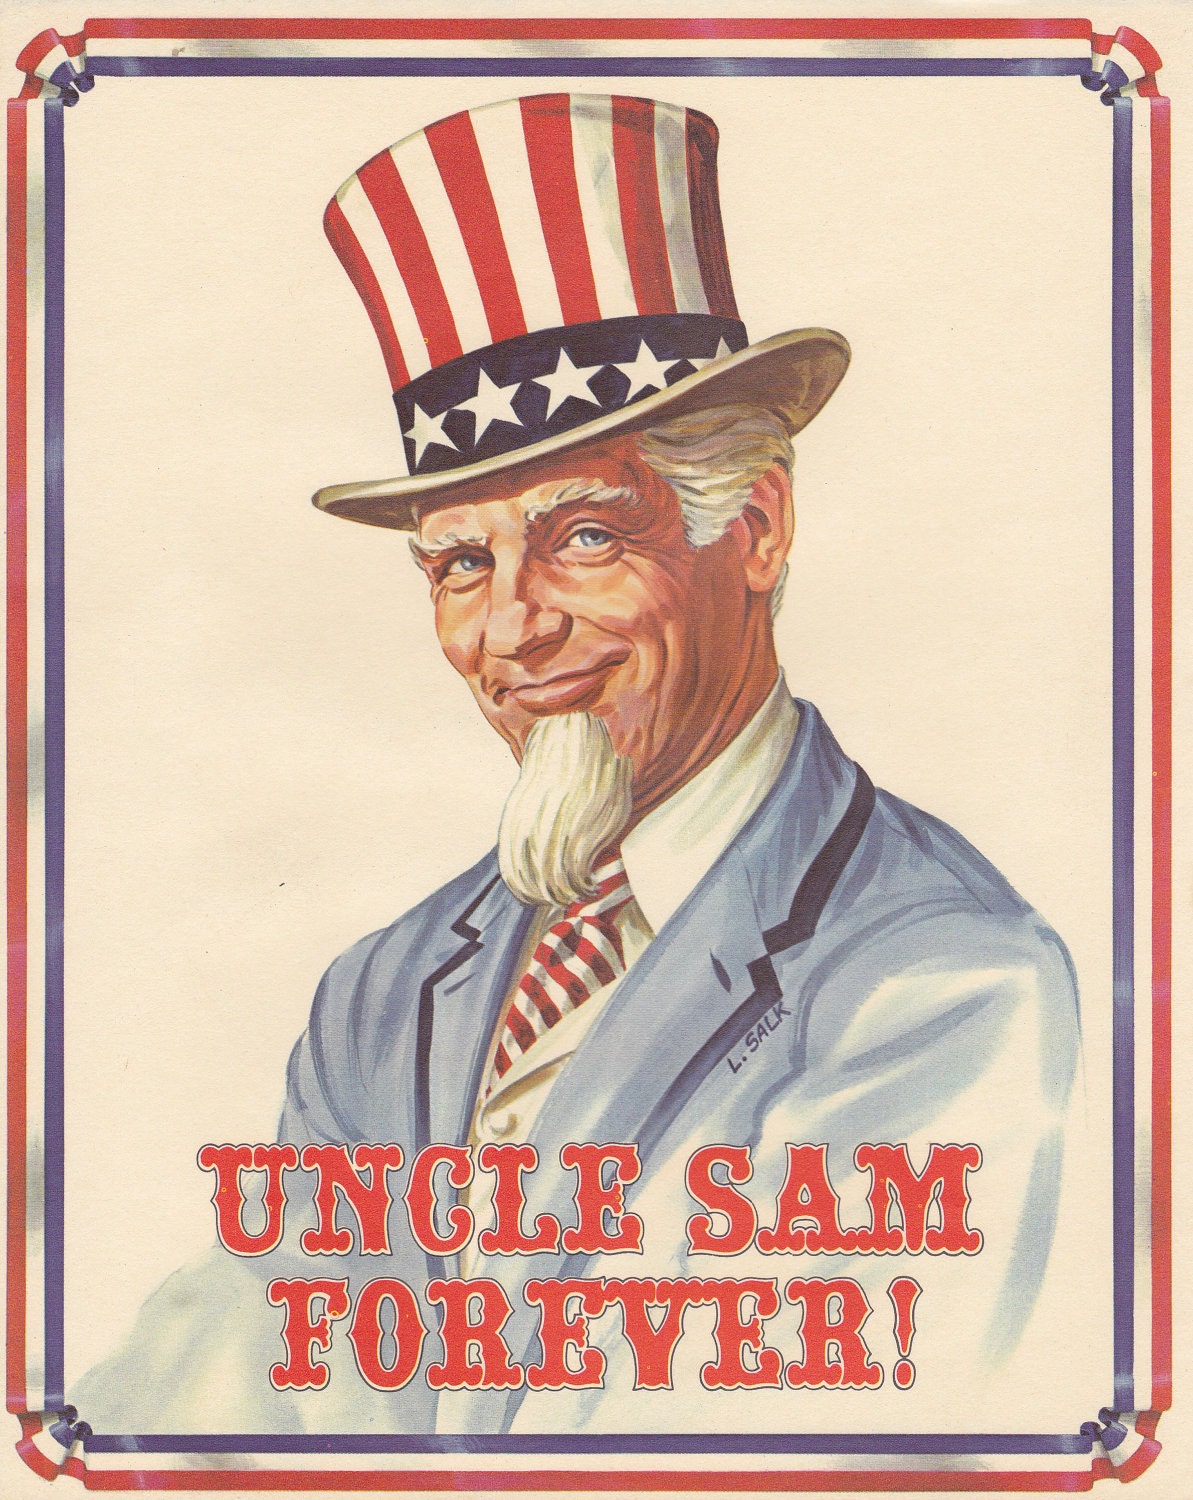 Постер сам. Персонаж-символ США - дядя Сэм. Американские плакаты. Дядя Сэм плакат. Американец плакат.